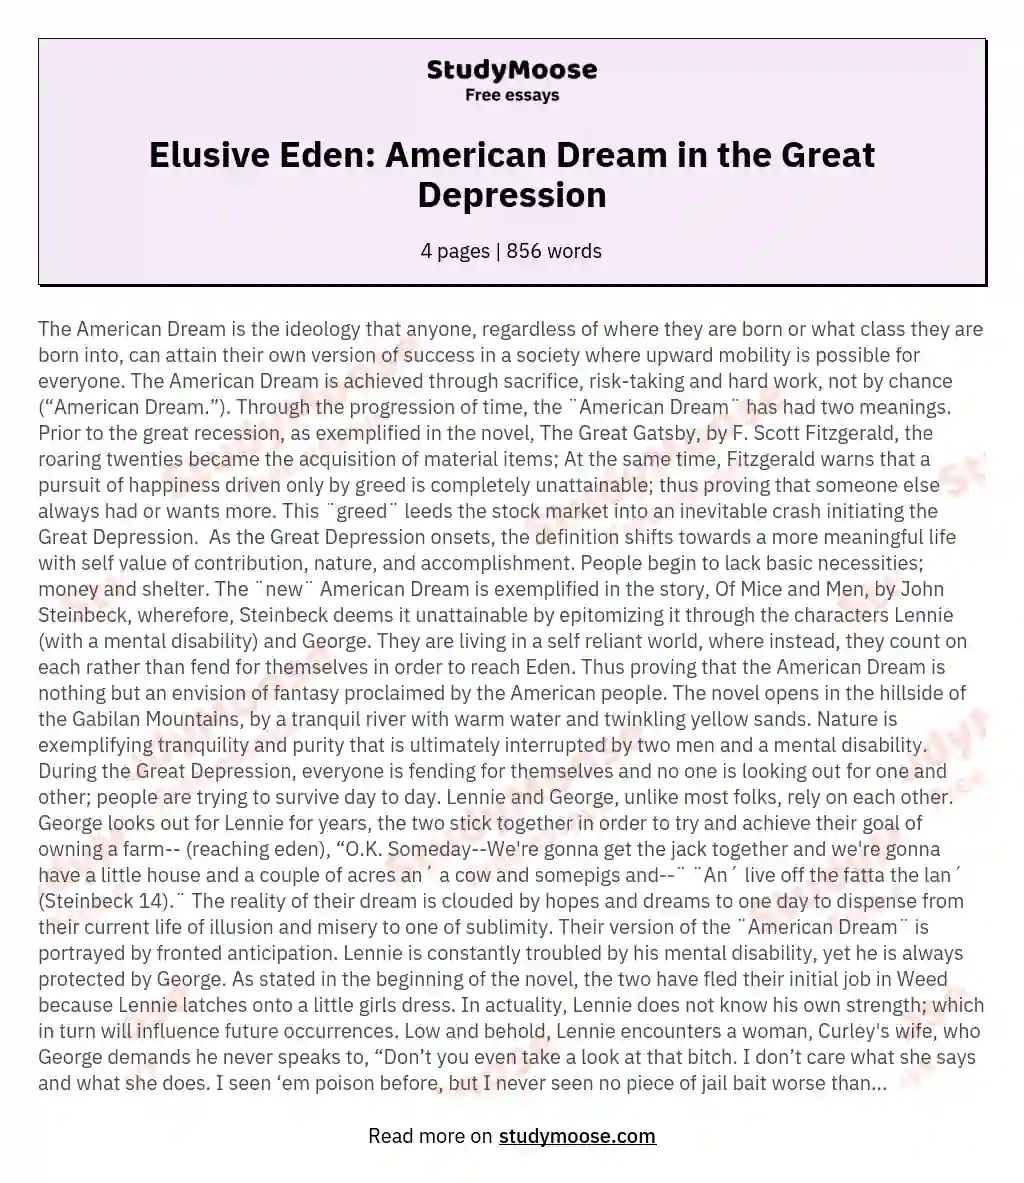 Elusive Eden: American Dream in the Great Depression essay